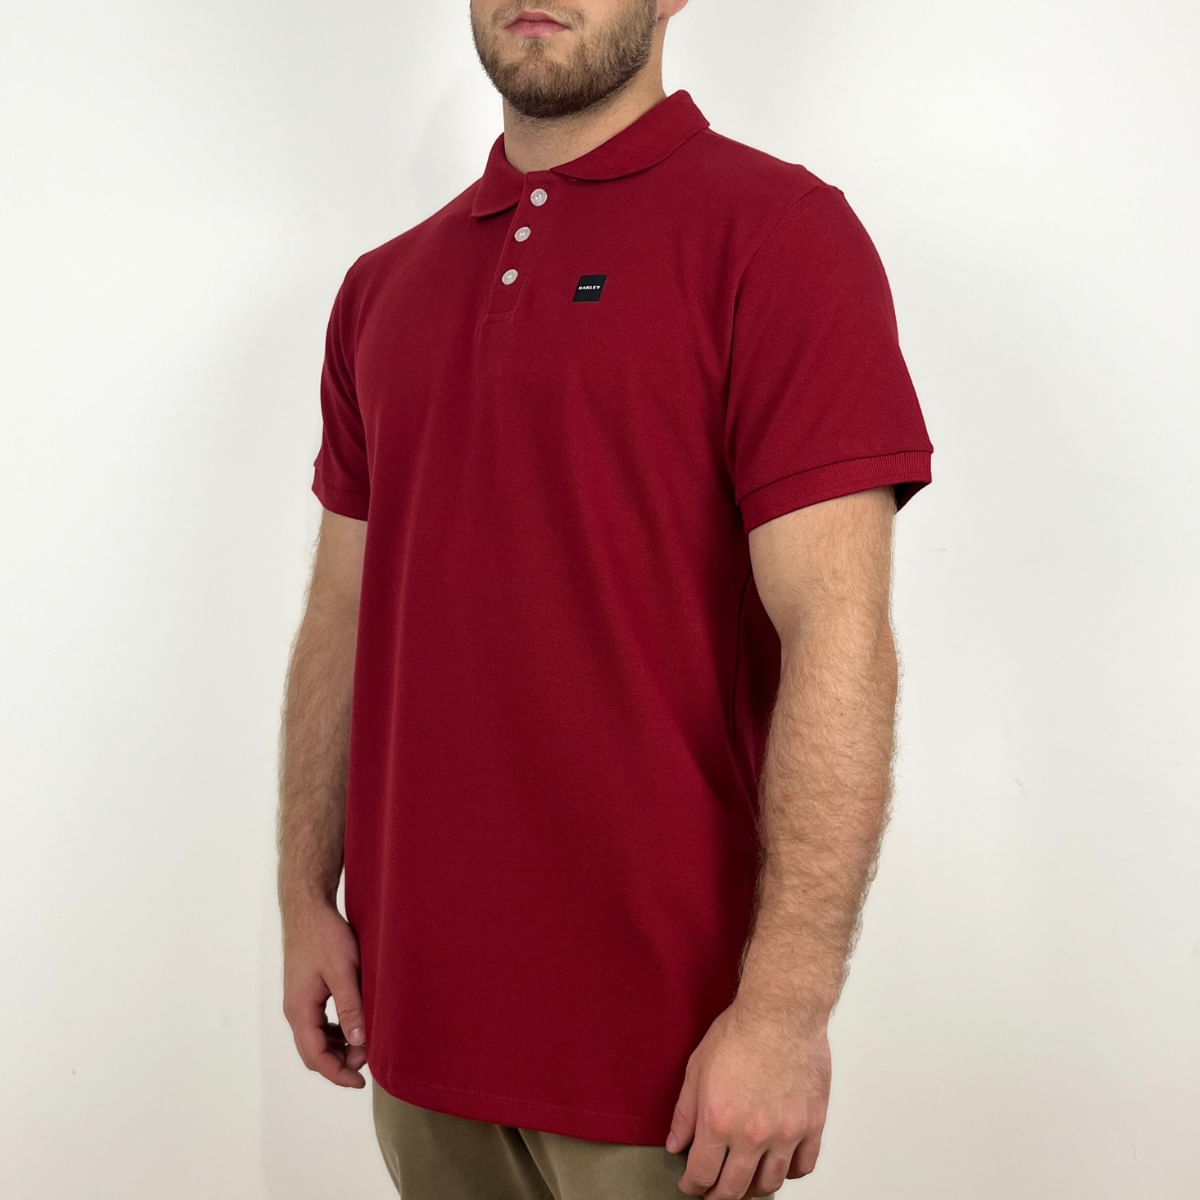 Camiseta Oakley Patch 2.0 Masculina Vermelha - 005115253 - Tennisbar